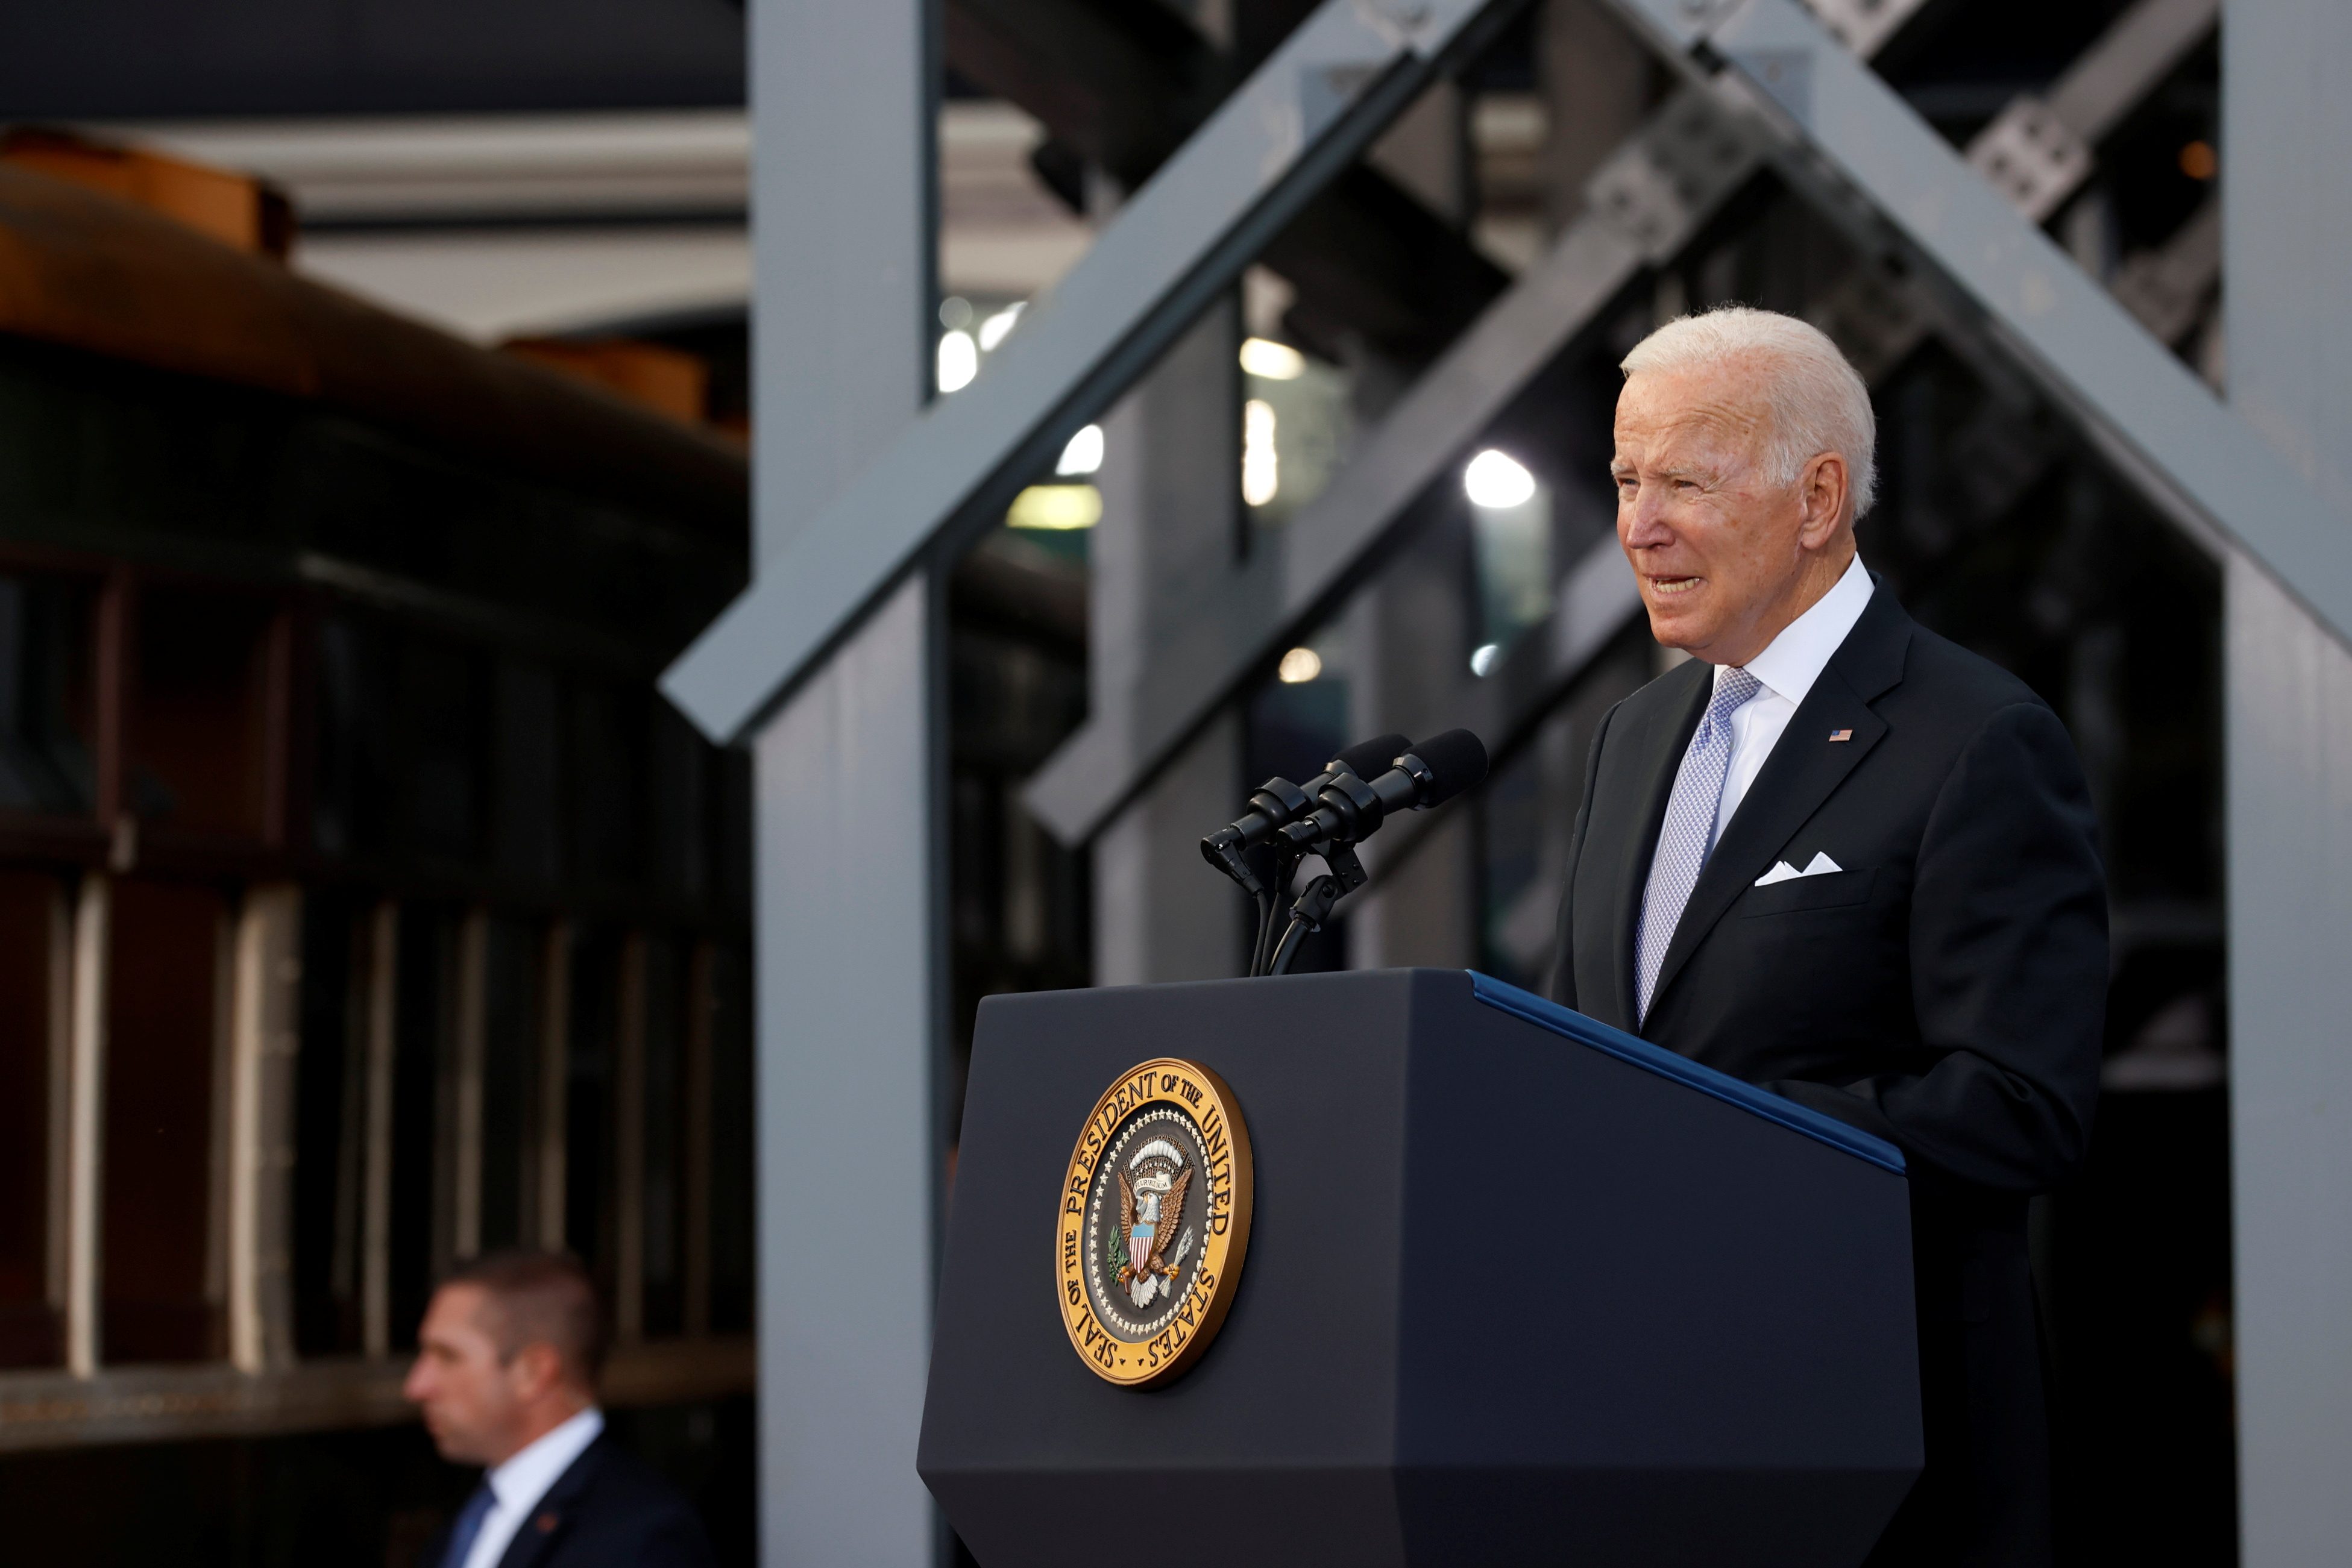 U.S. President Joe Biden delivers remarks on infrastructure legislation at the Electric City Trolley Museum in Scranton, Pennsylvania, U.S. October 20, 2021. REUTERS/Jonathan Ernst